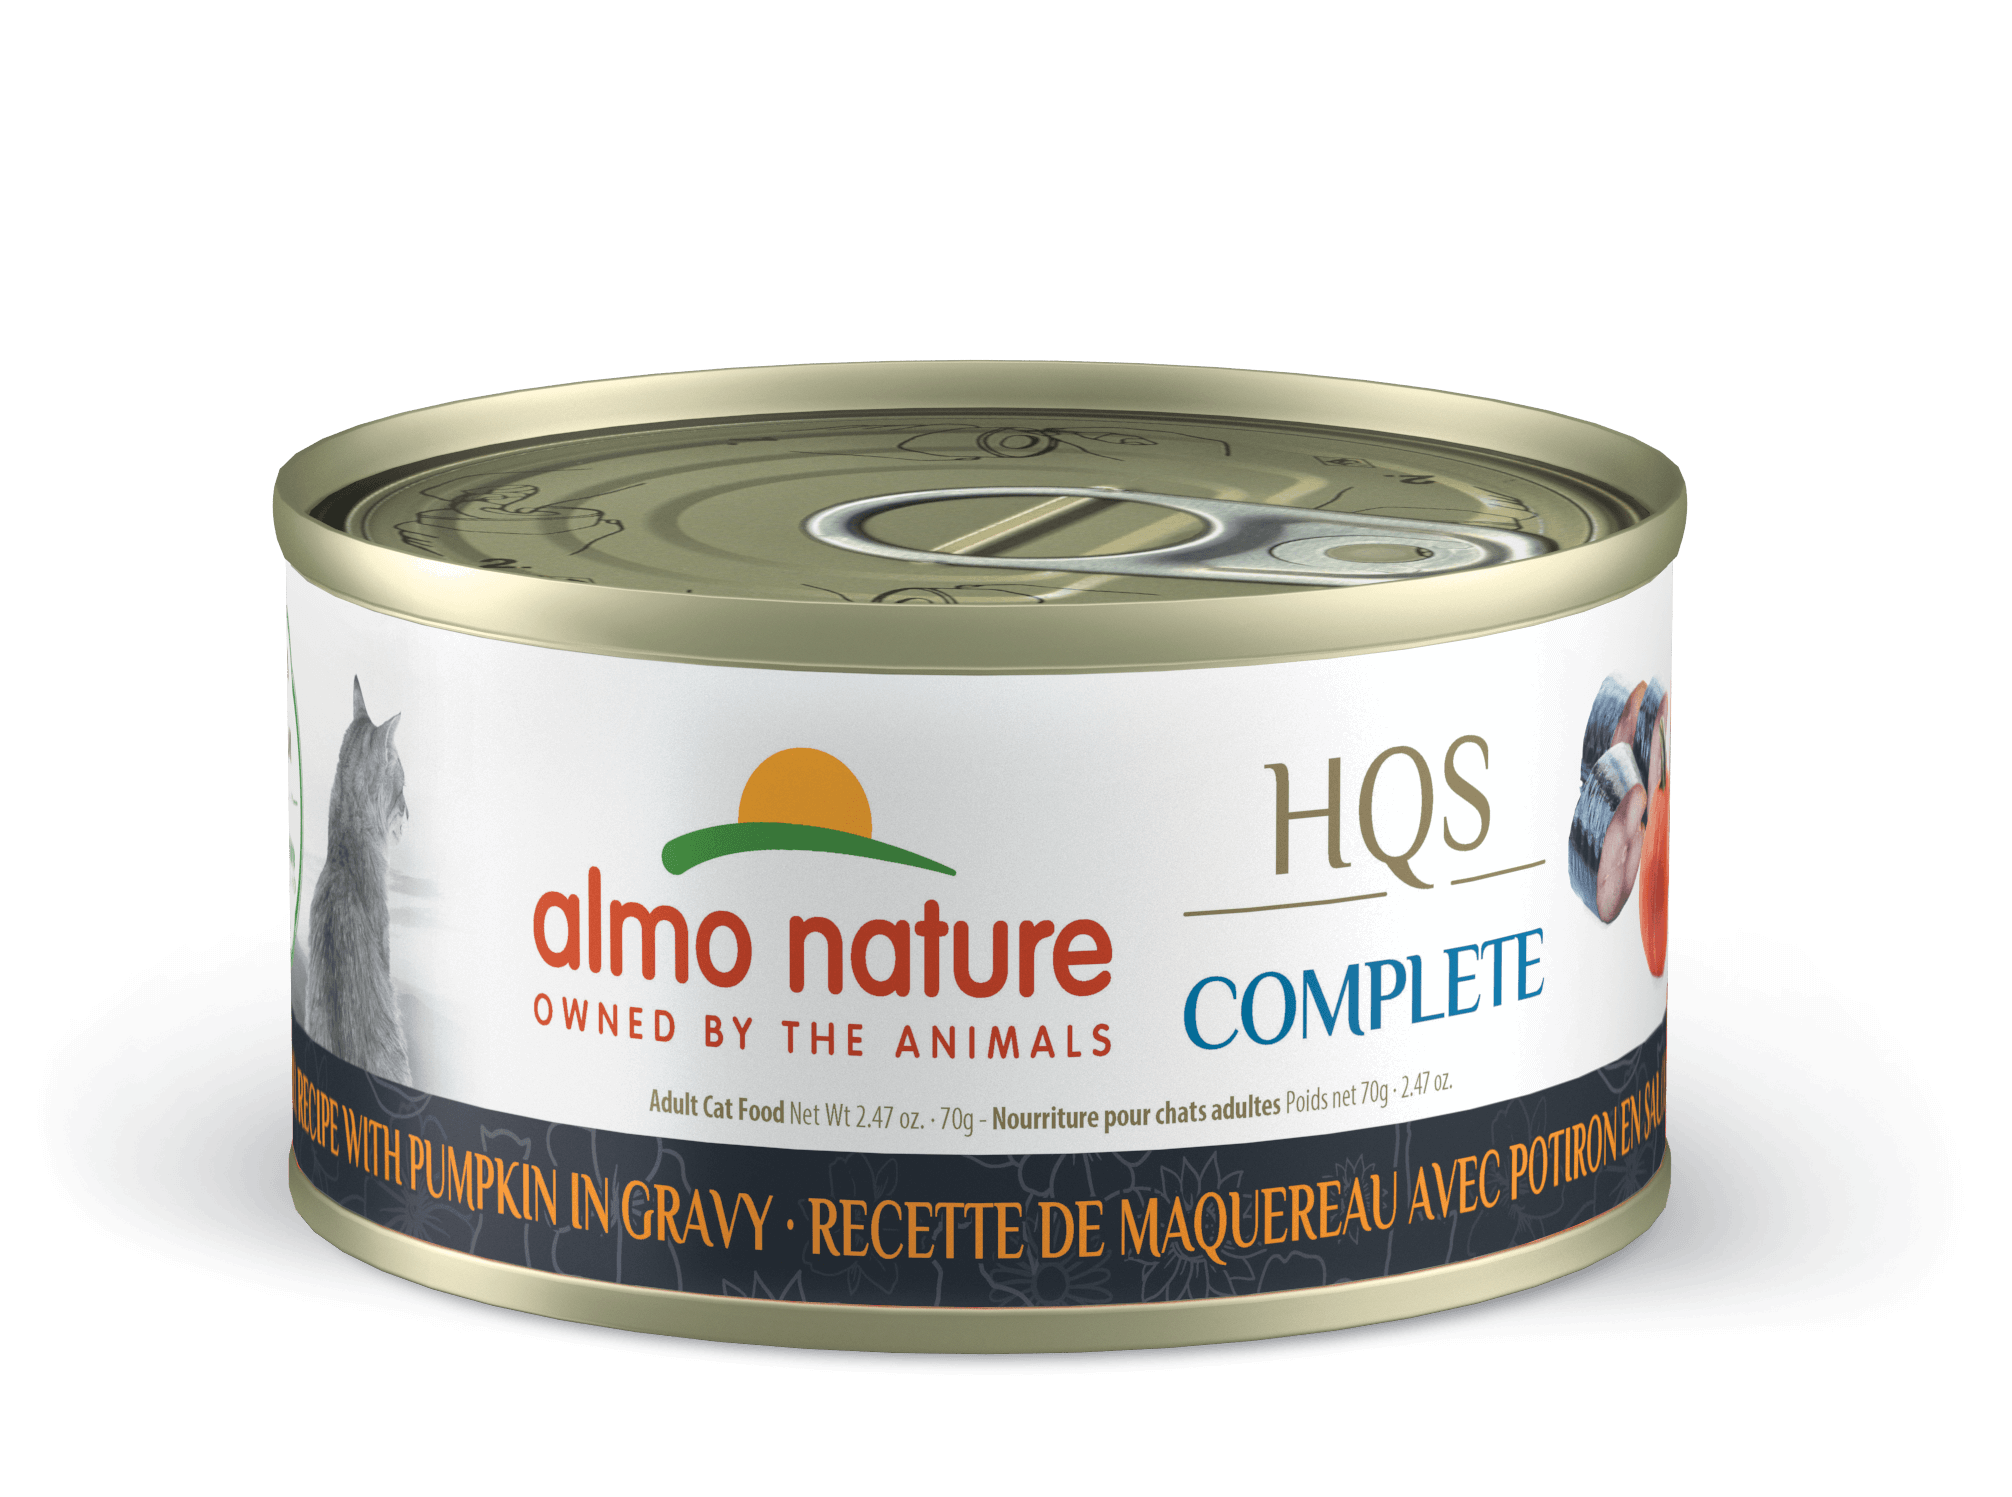  Almo Nature - HQS Complete Mackerel Recipe with Pumpkin in Gravy (Wet Cat Food)